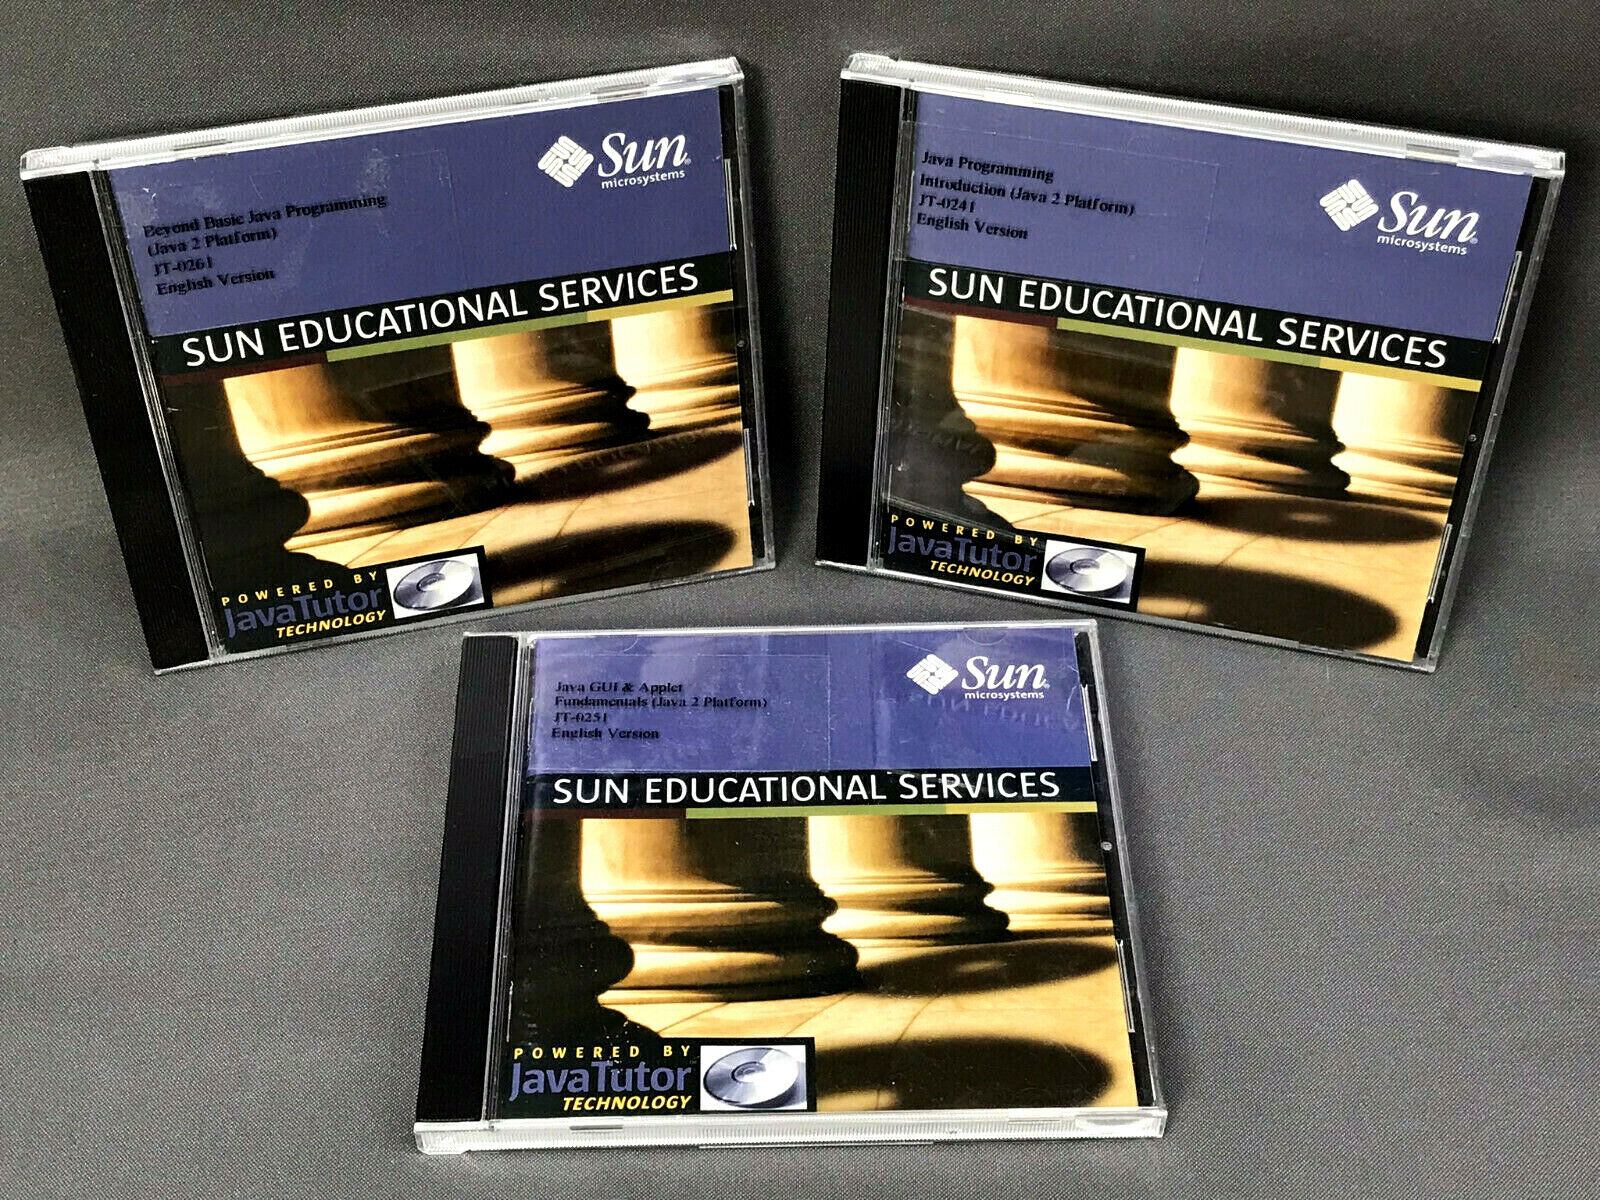 Sun Java Programming - Set of 3 Java-2 Platform Training CDs - Vintage (c) 1999